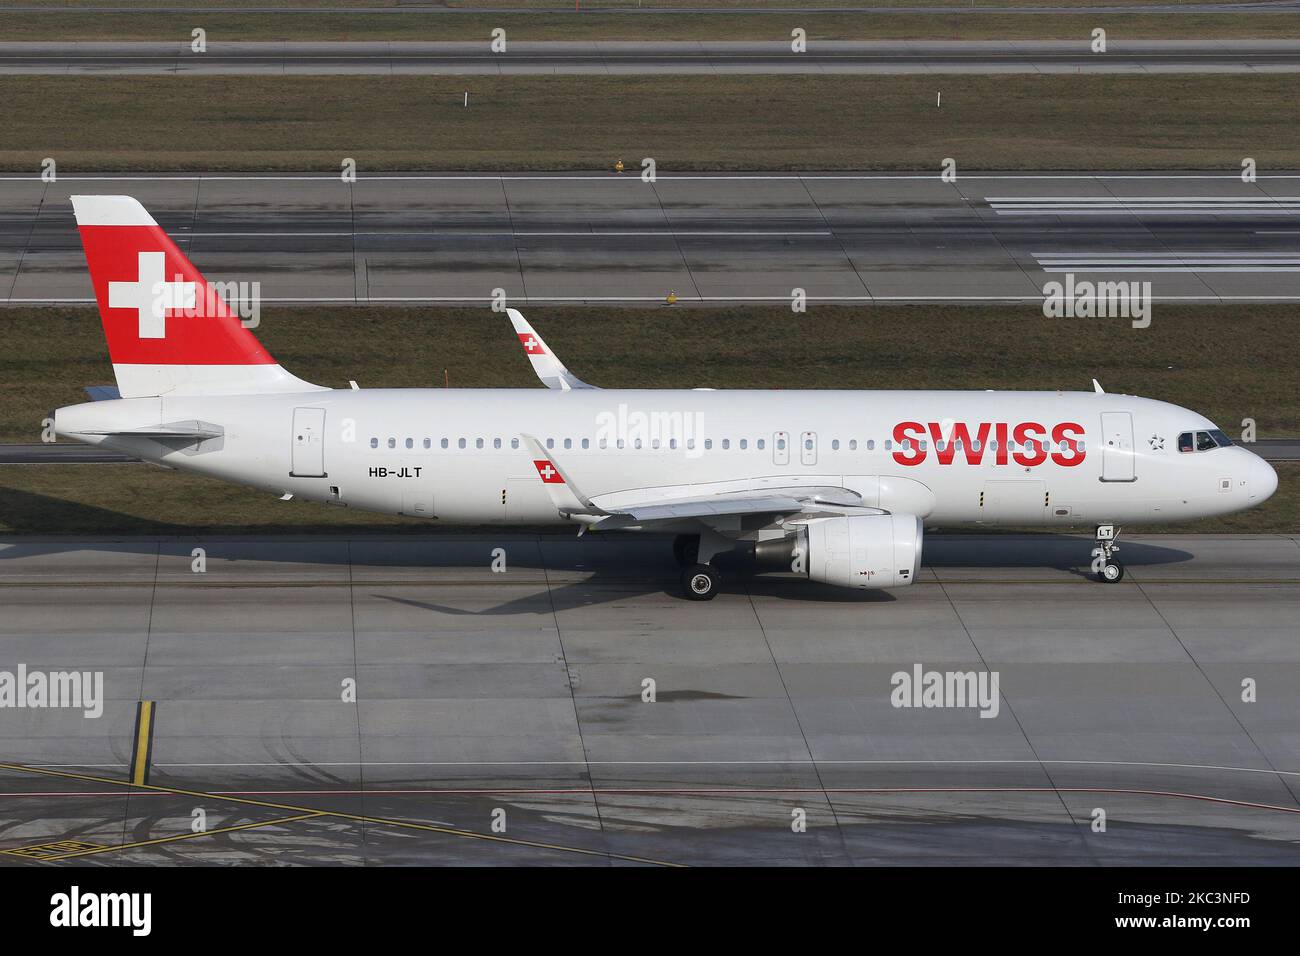 A Swiss Airlines Airbus A320 at Zurich Kloten Airport, Switzerland on 23 January 2019. (Photo by Robert Smith/MI News/NurPhoto) Stock Photo